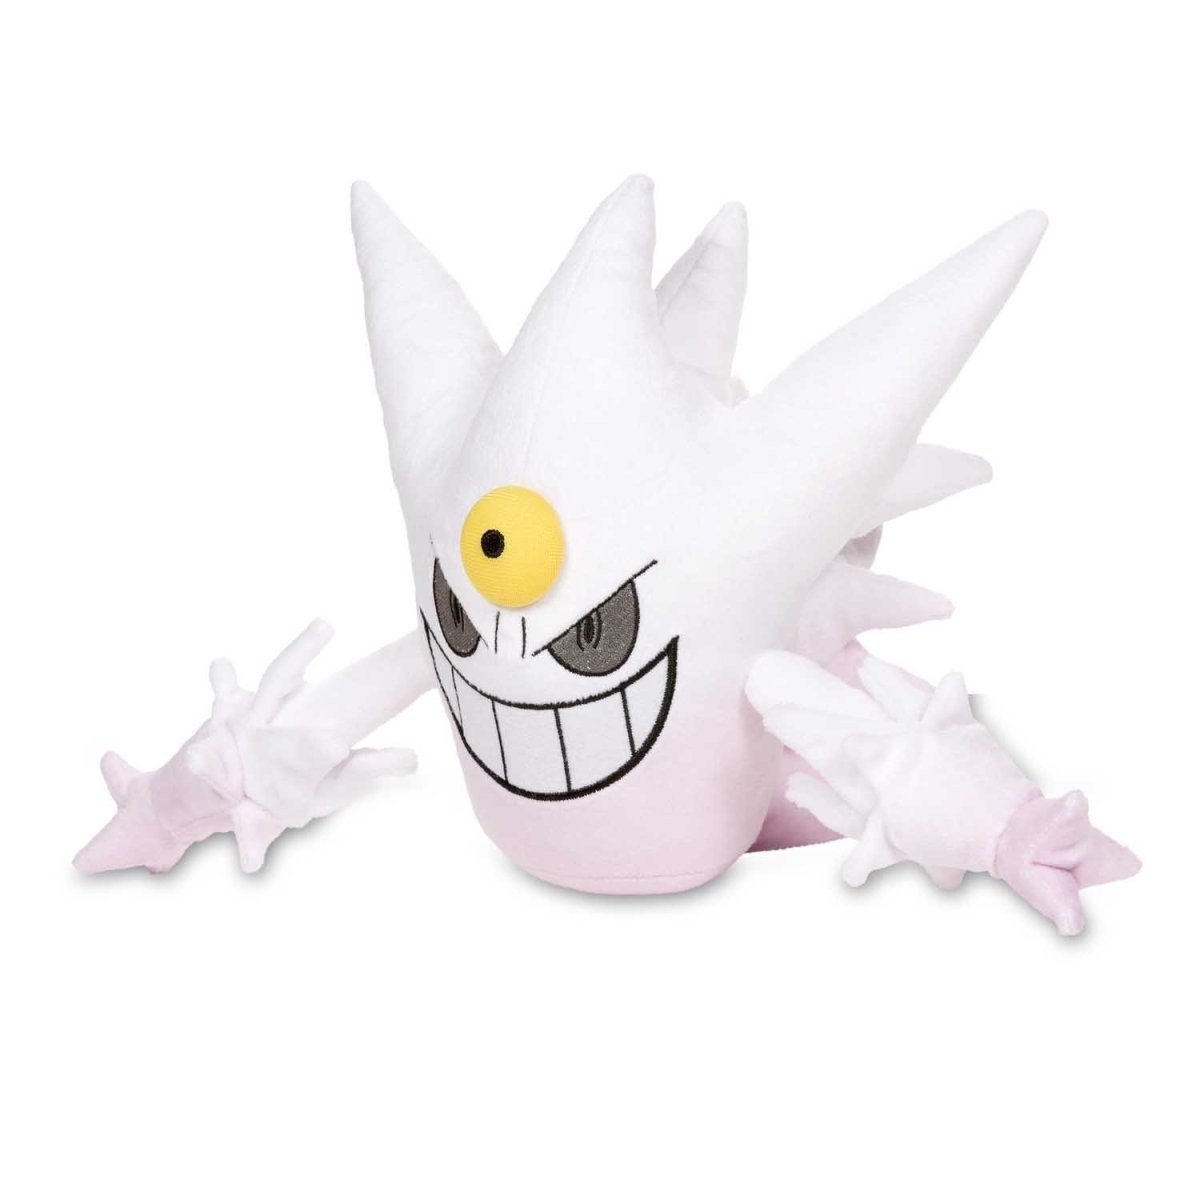 Pokemon Center 2014 Shiny White Mega Gengar Plush Toy